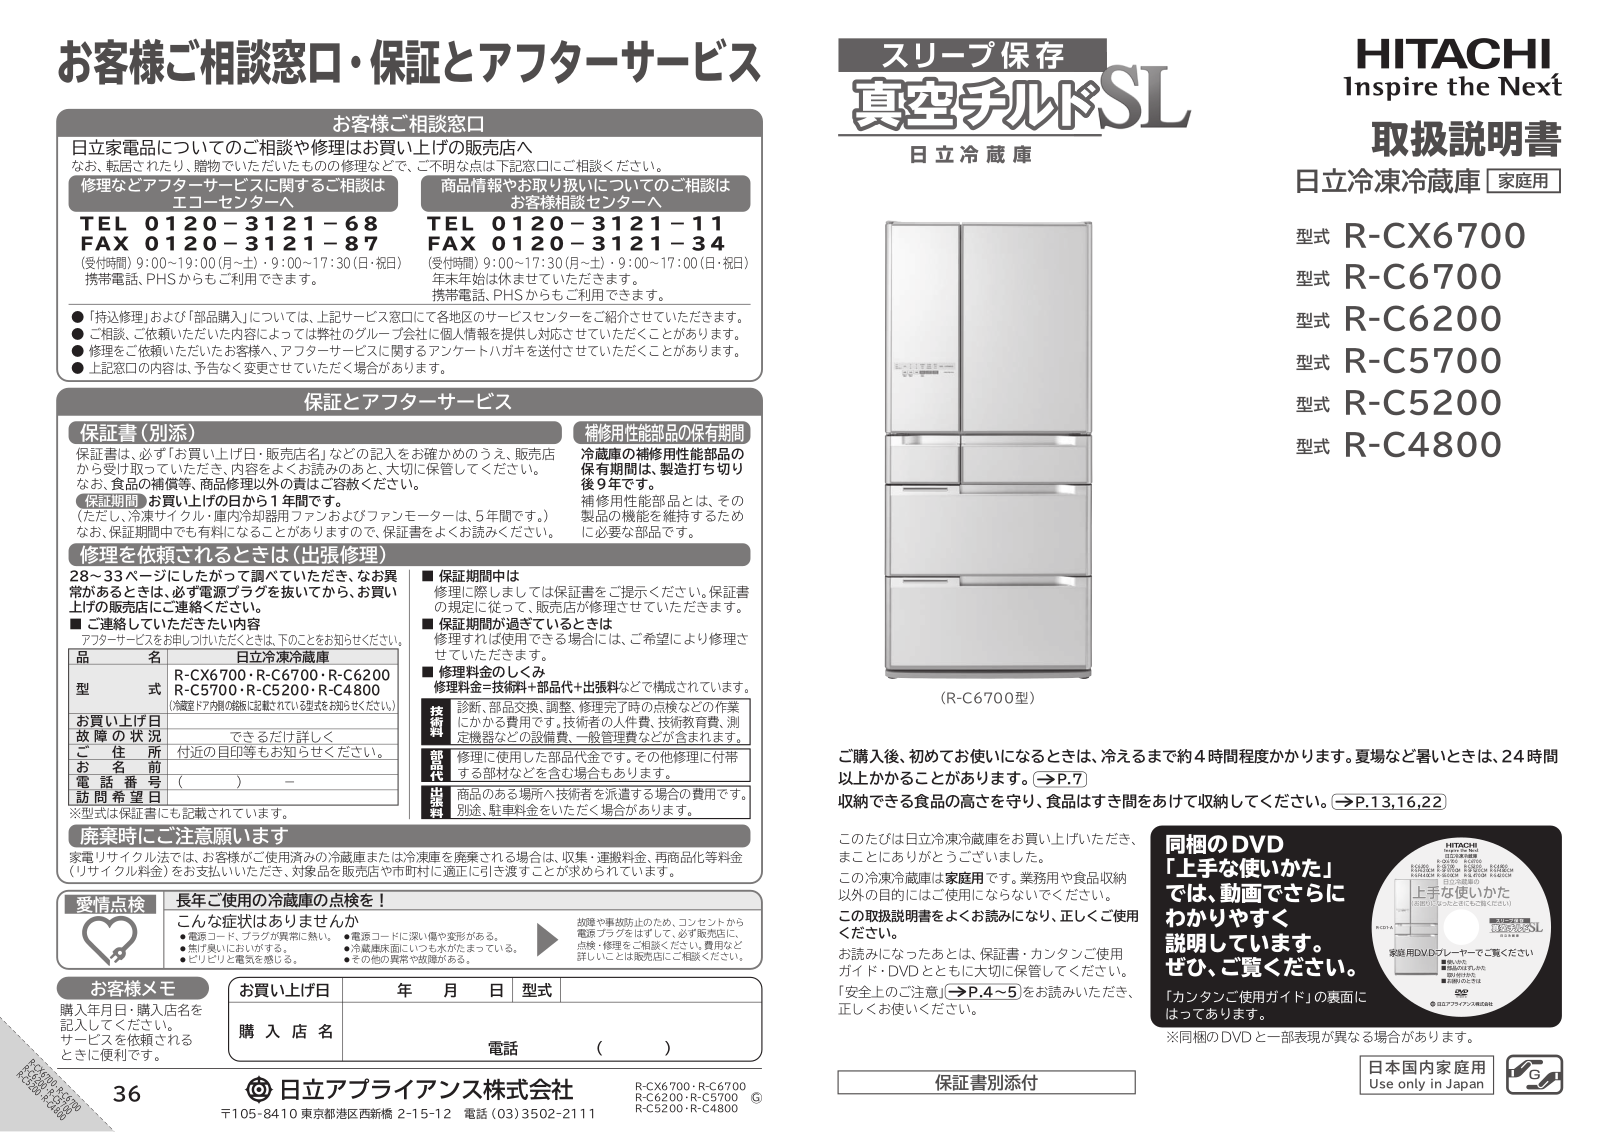 HITACHI R-CX6700, R-C6700, R-C6200, R-C5700, R-C5200 User guide